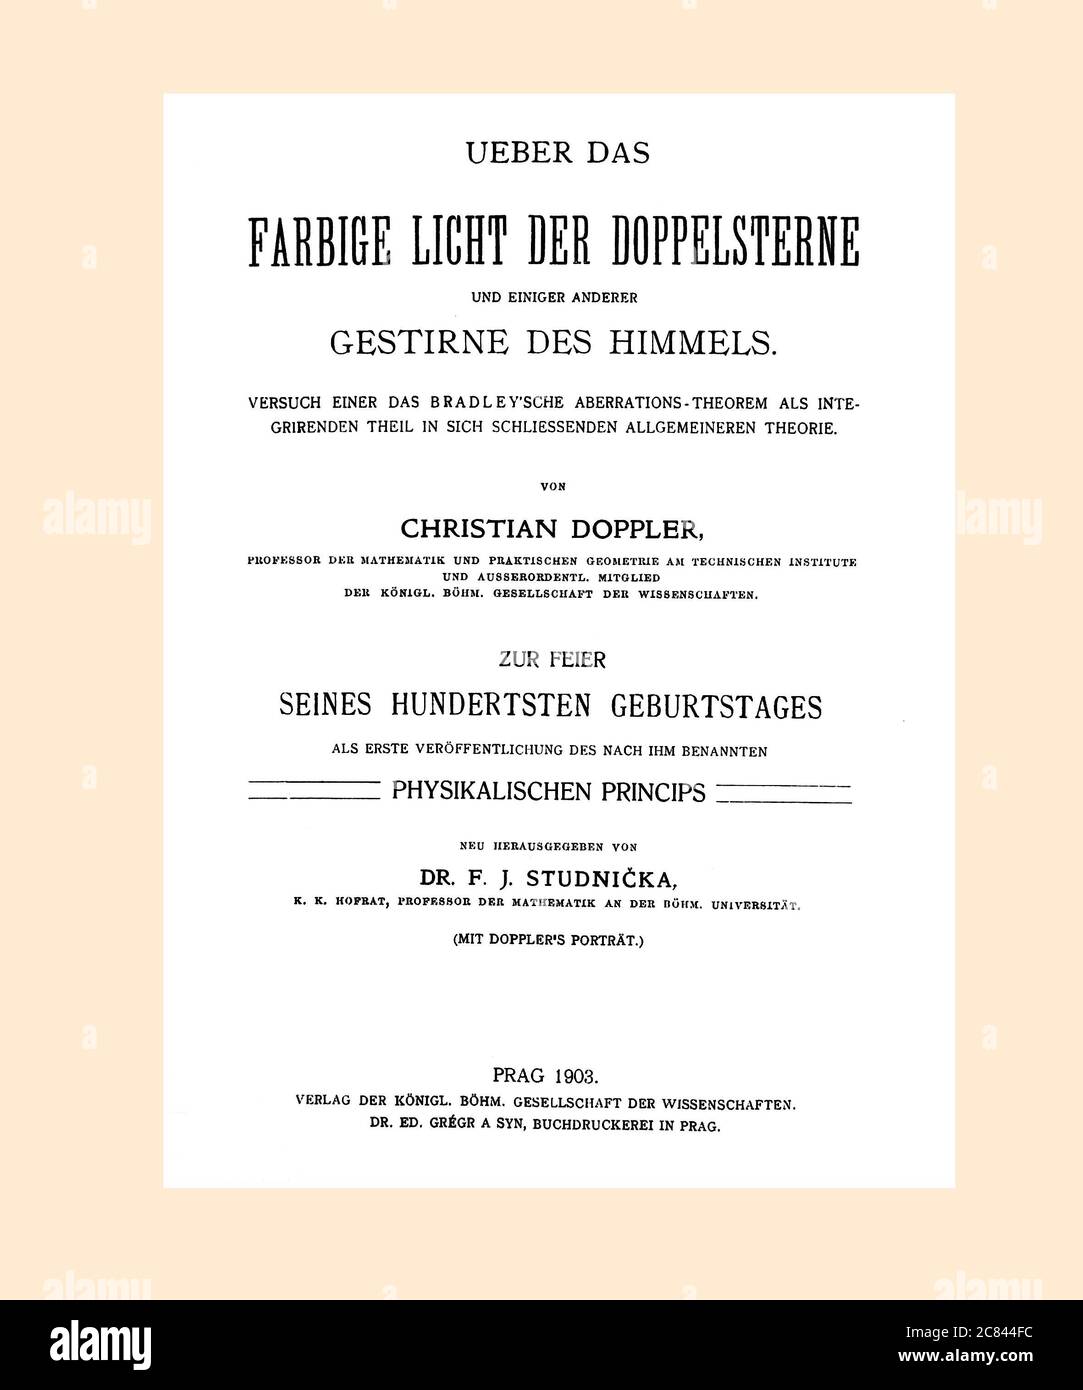 Christian Doppler Ueber das Farbige Licht der Doppelsterne Refreshed and Reset Stock Photo